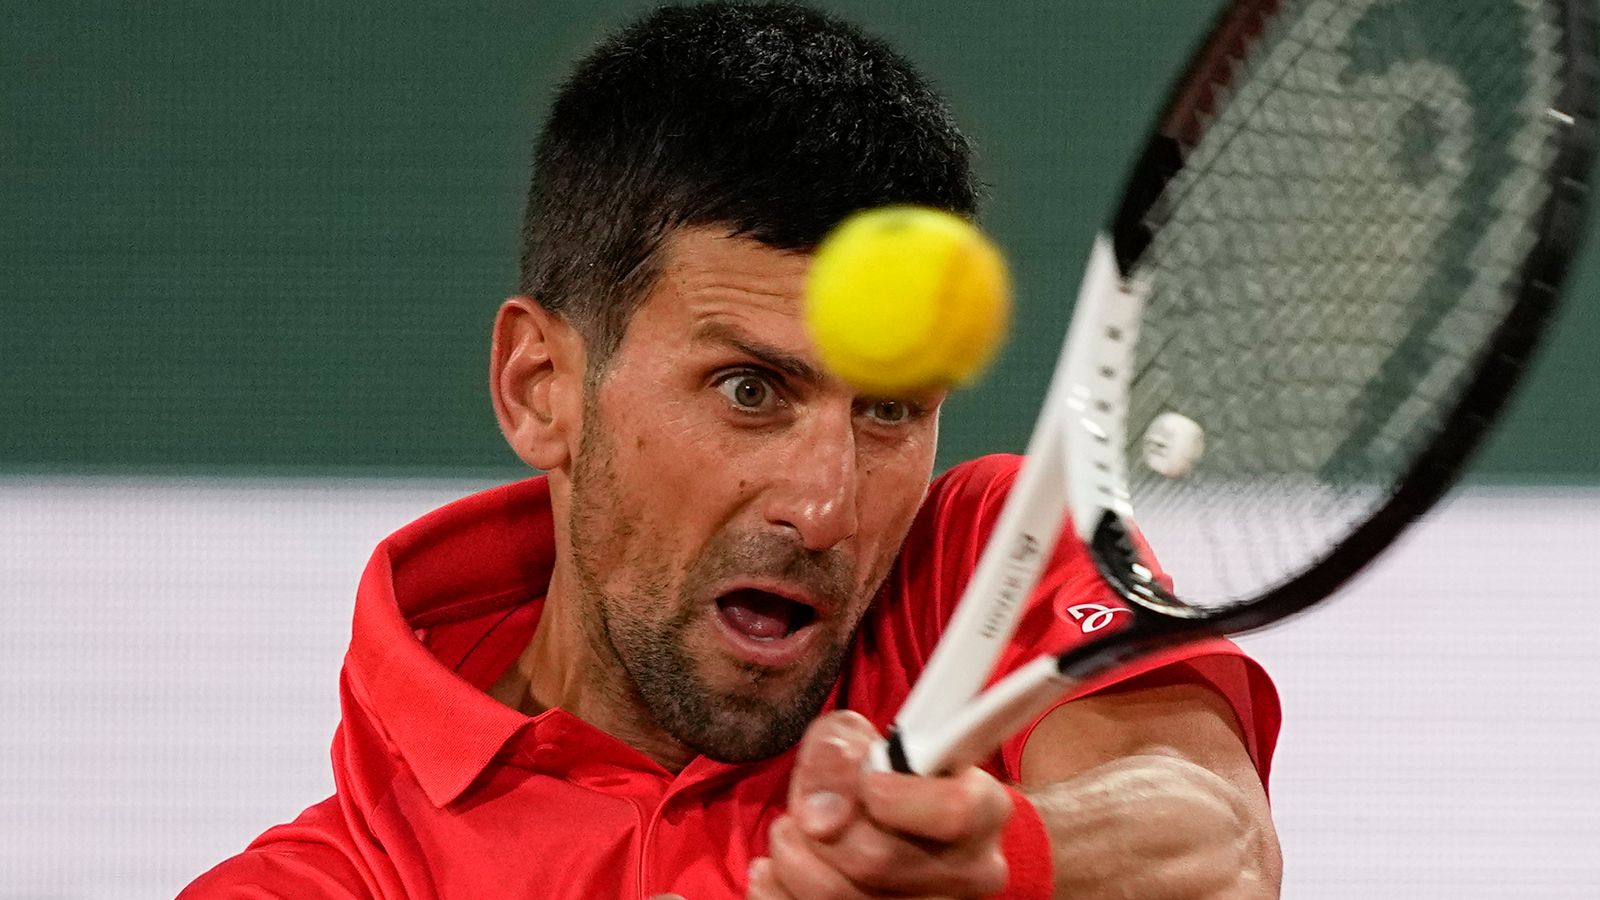 French Open: Novak Djokovic beats Alex Molcan to progress into third round in Paris